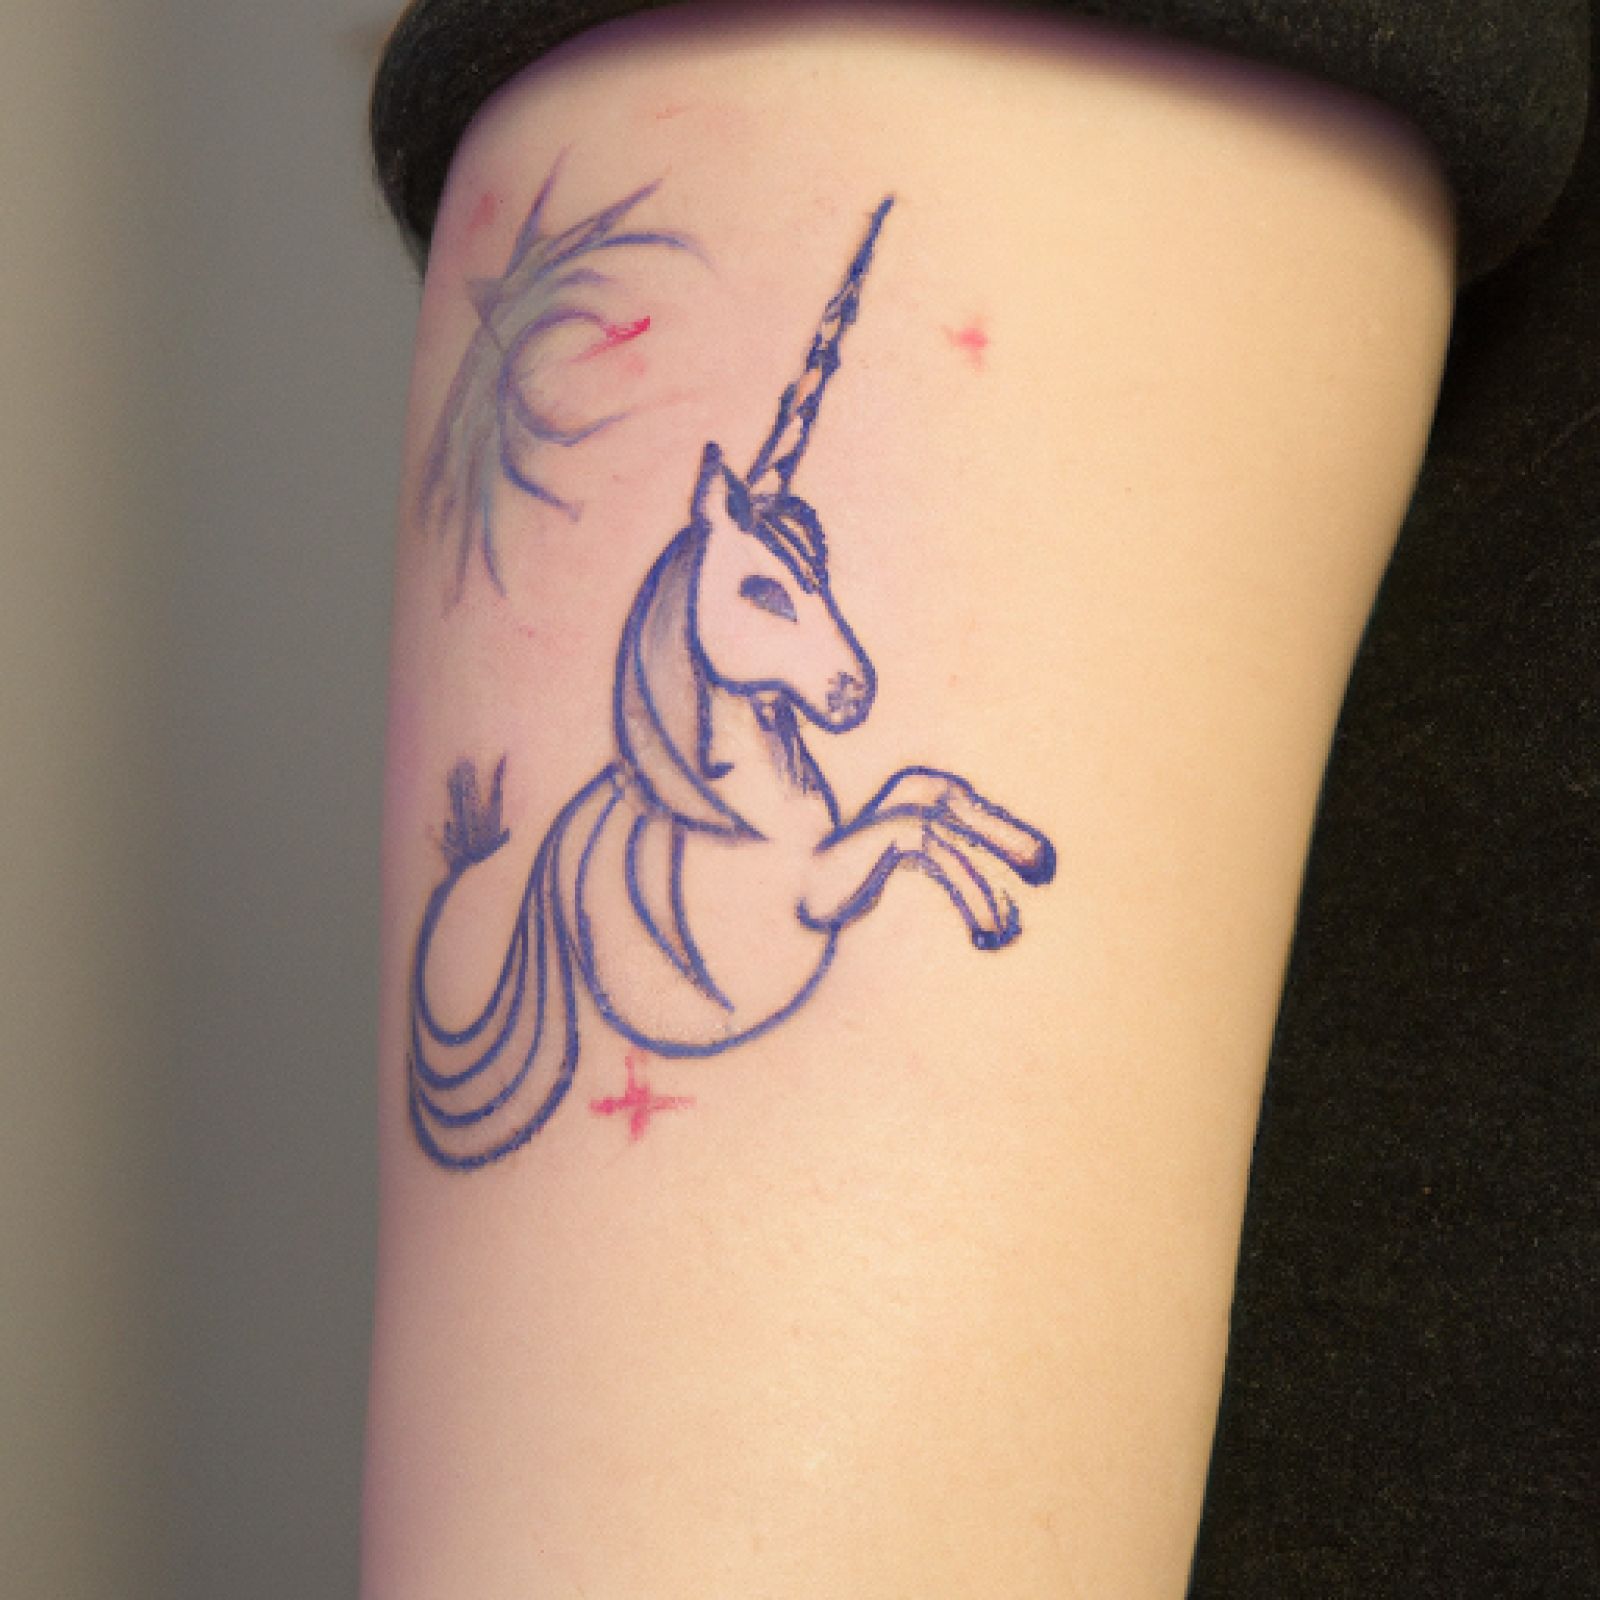 Unicorn tattoo on sleeve for women